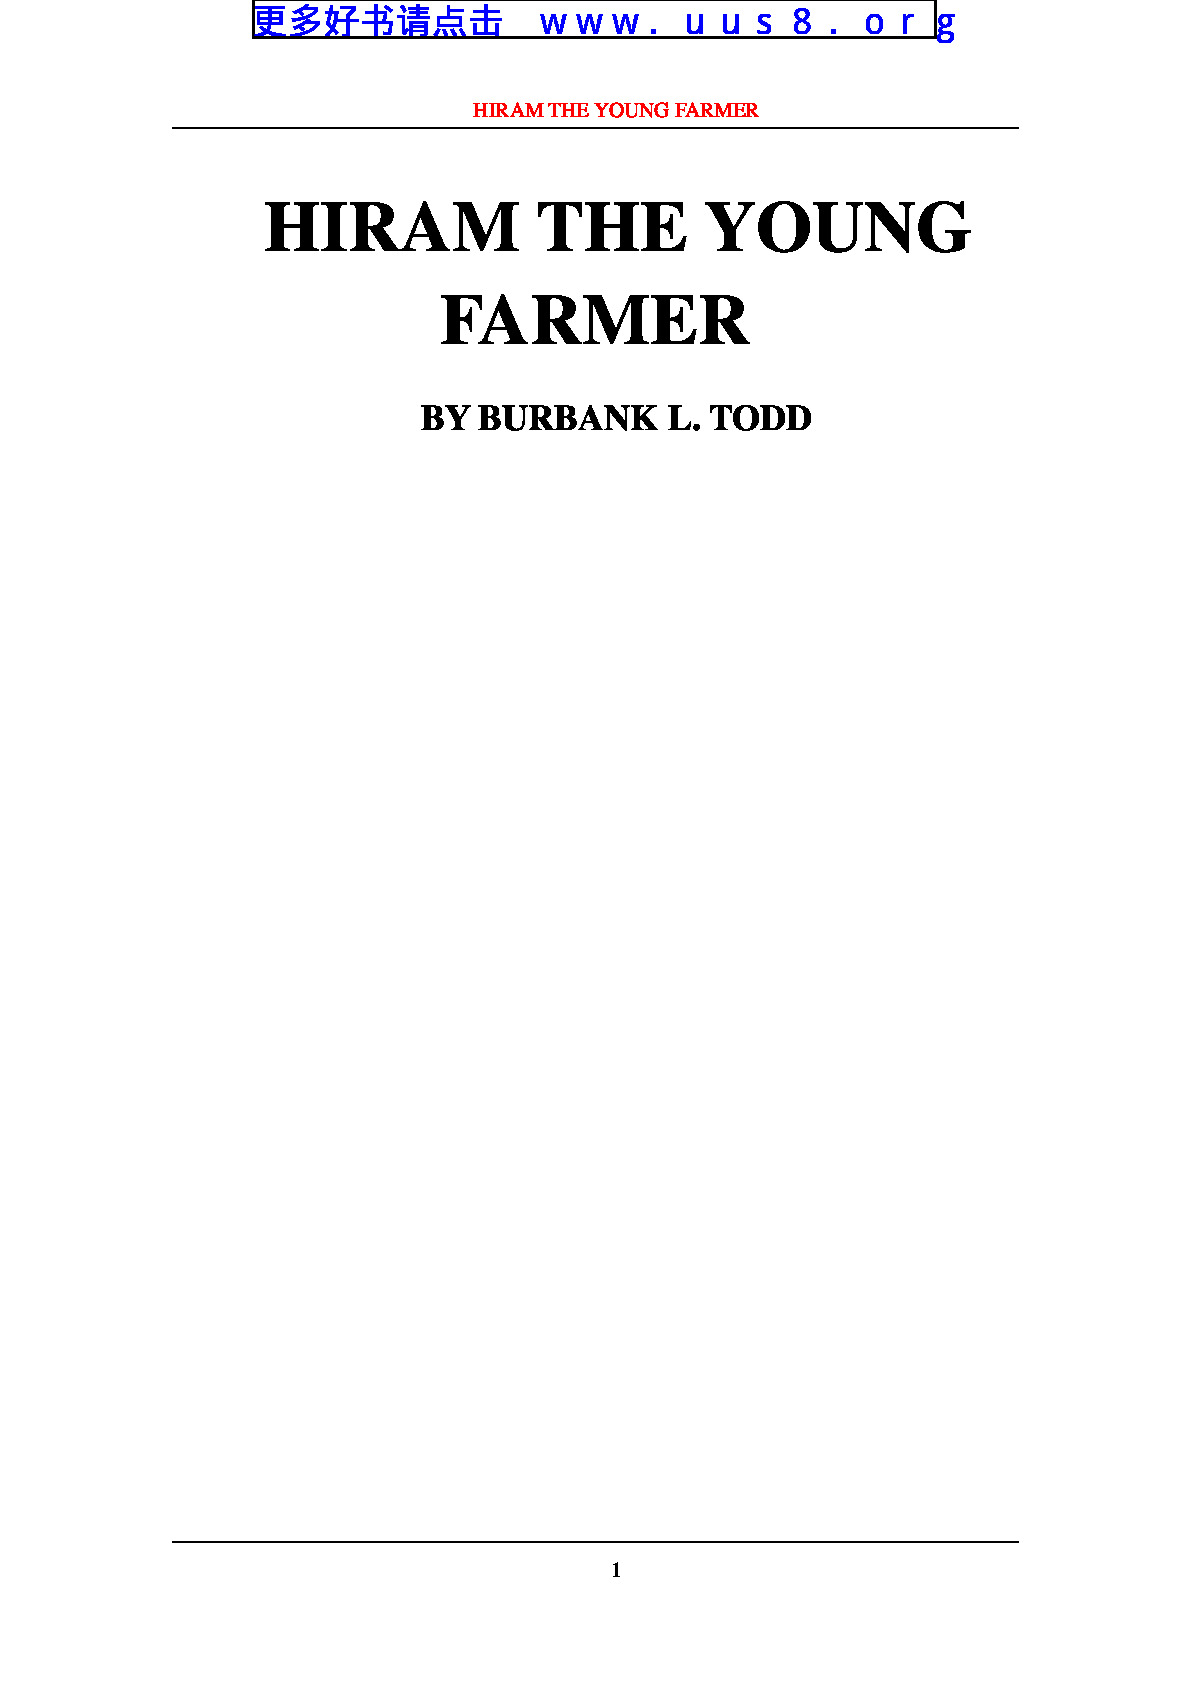 HIRAM_THE_YOUNG_FARMER(小农场主哈兰姆)